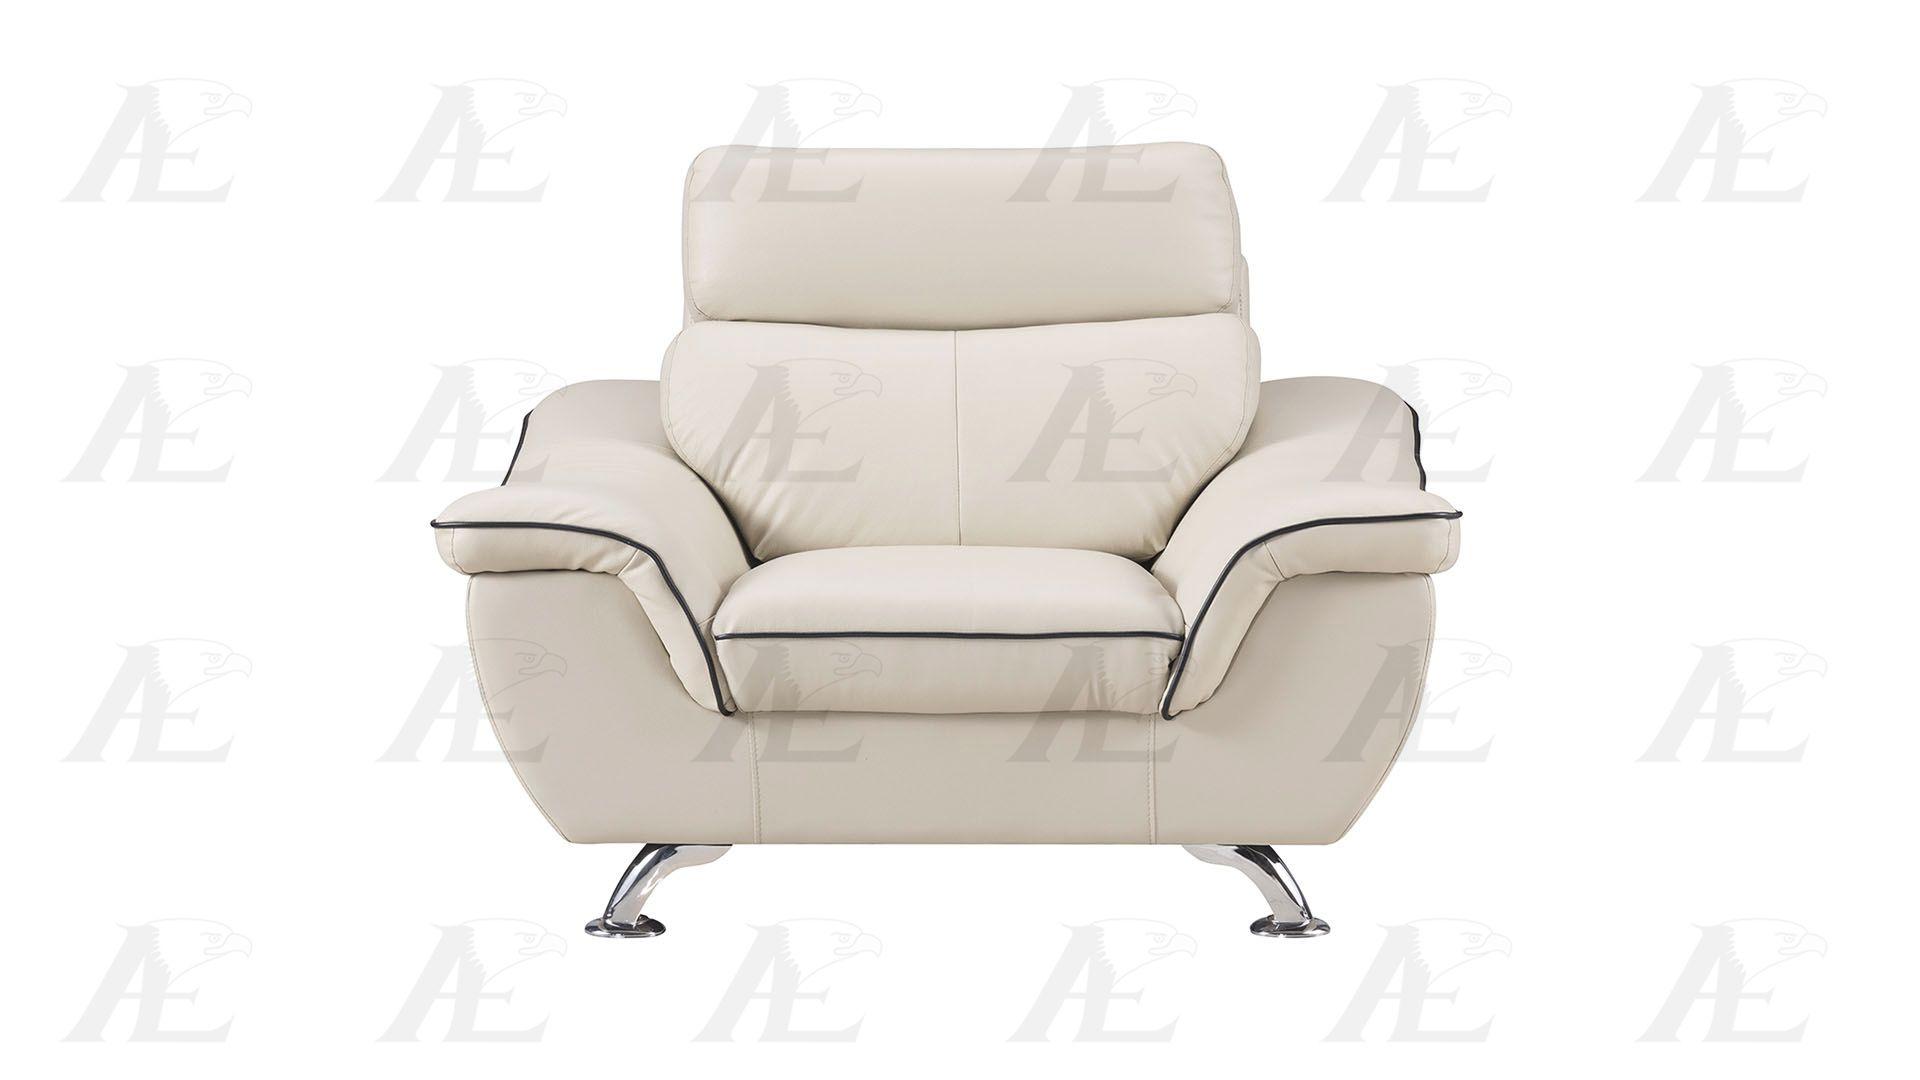 

    
EK-B303-LG.BK Set-3 American Eagle Furniture Sofa Loveseat and Chair Set
